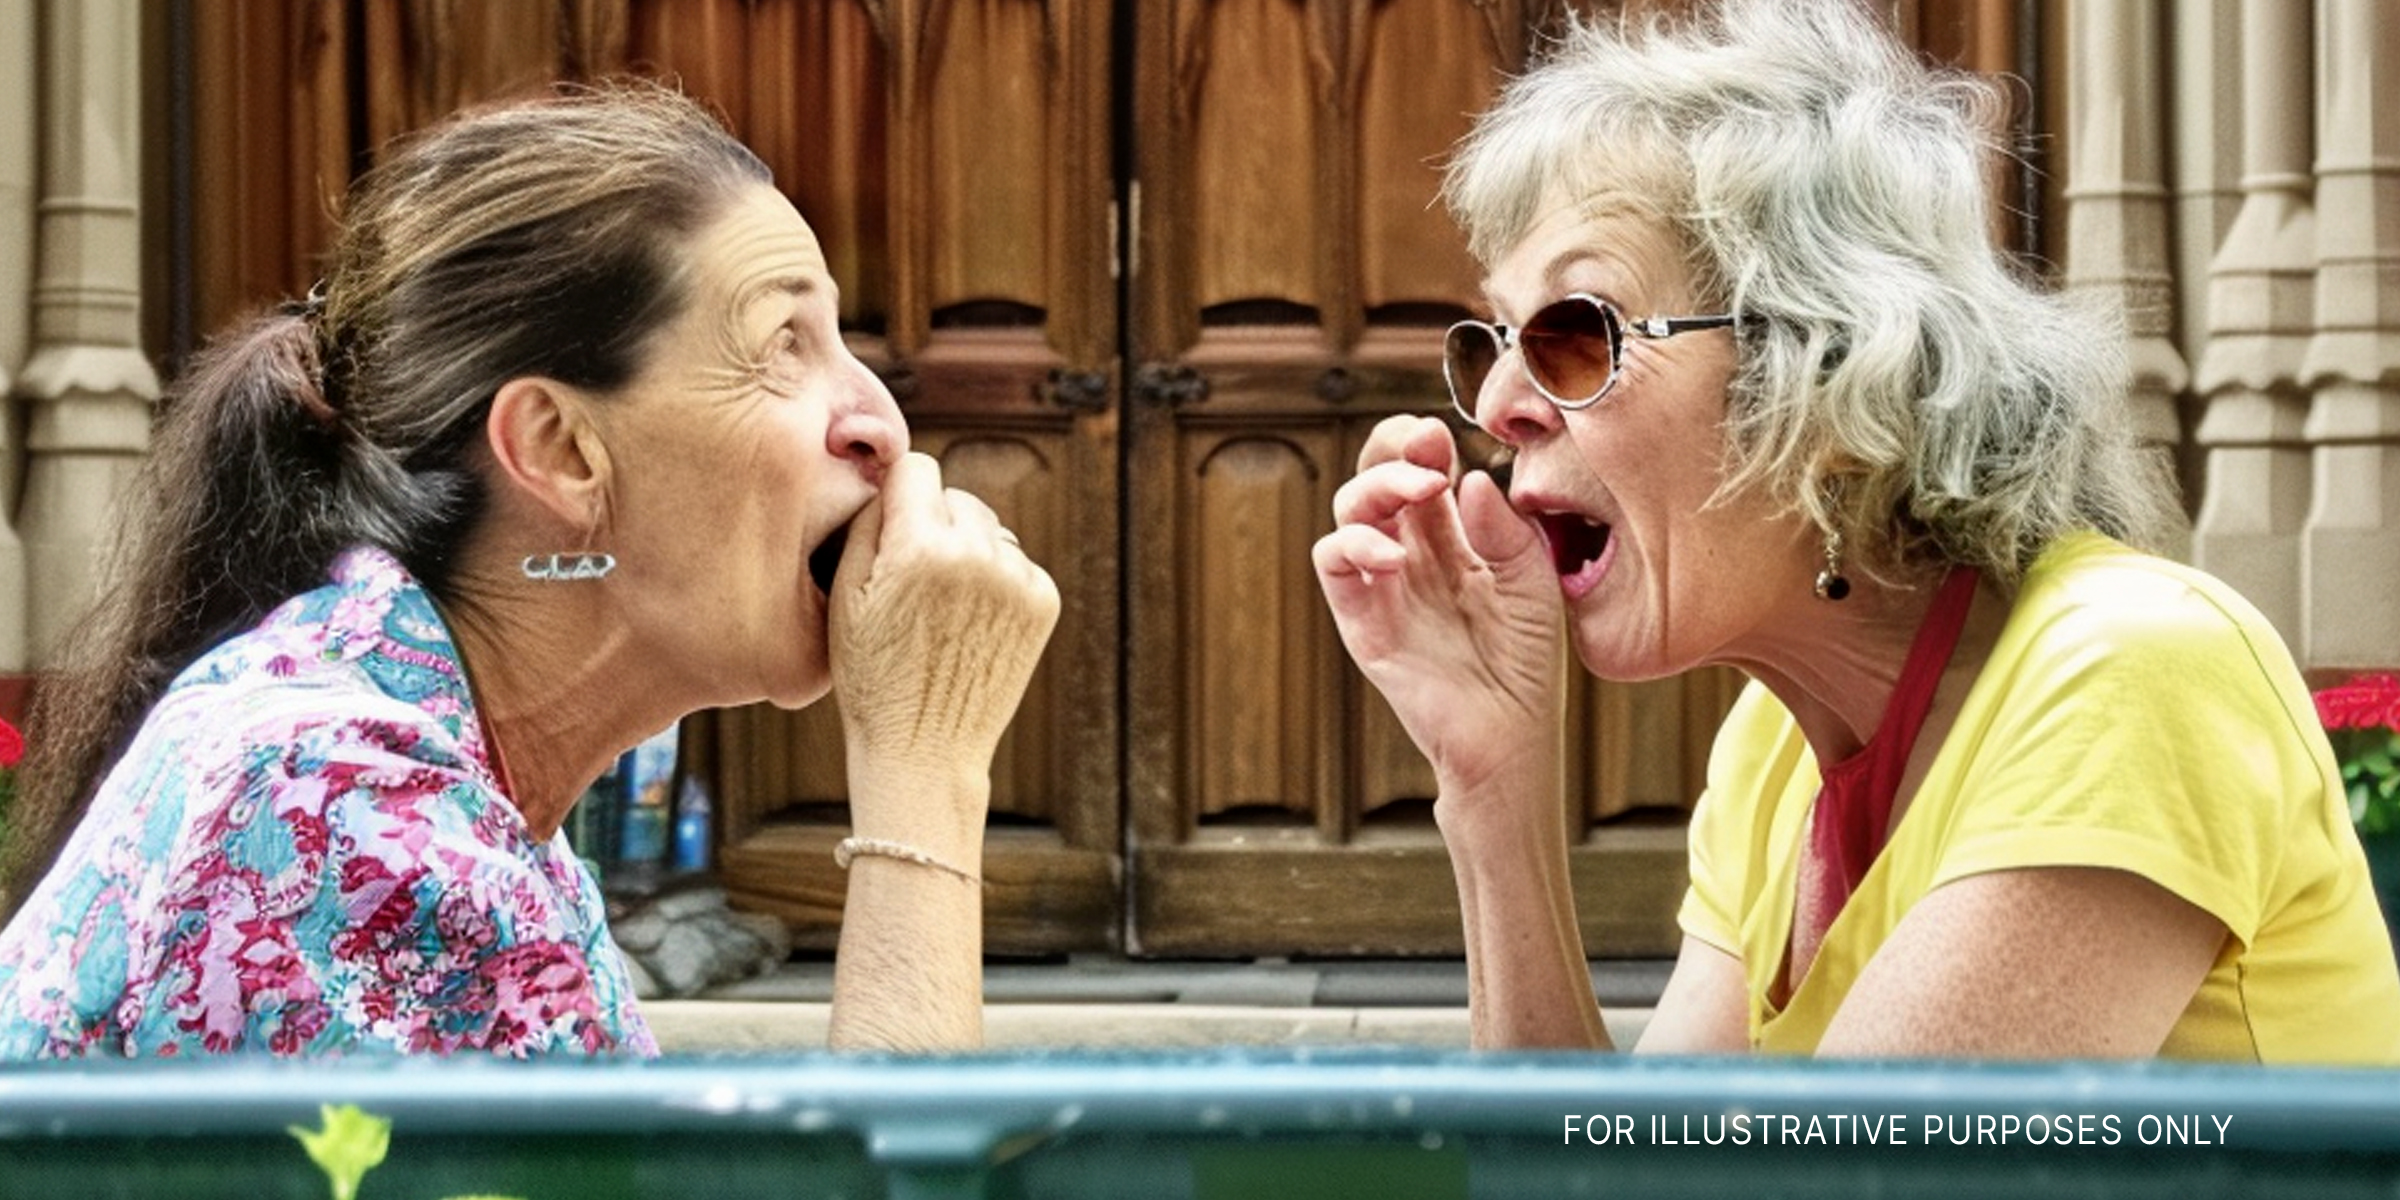 Two older women gossiping | Source: Amomama